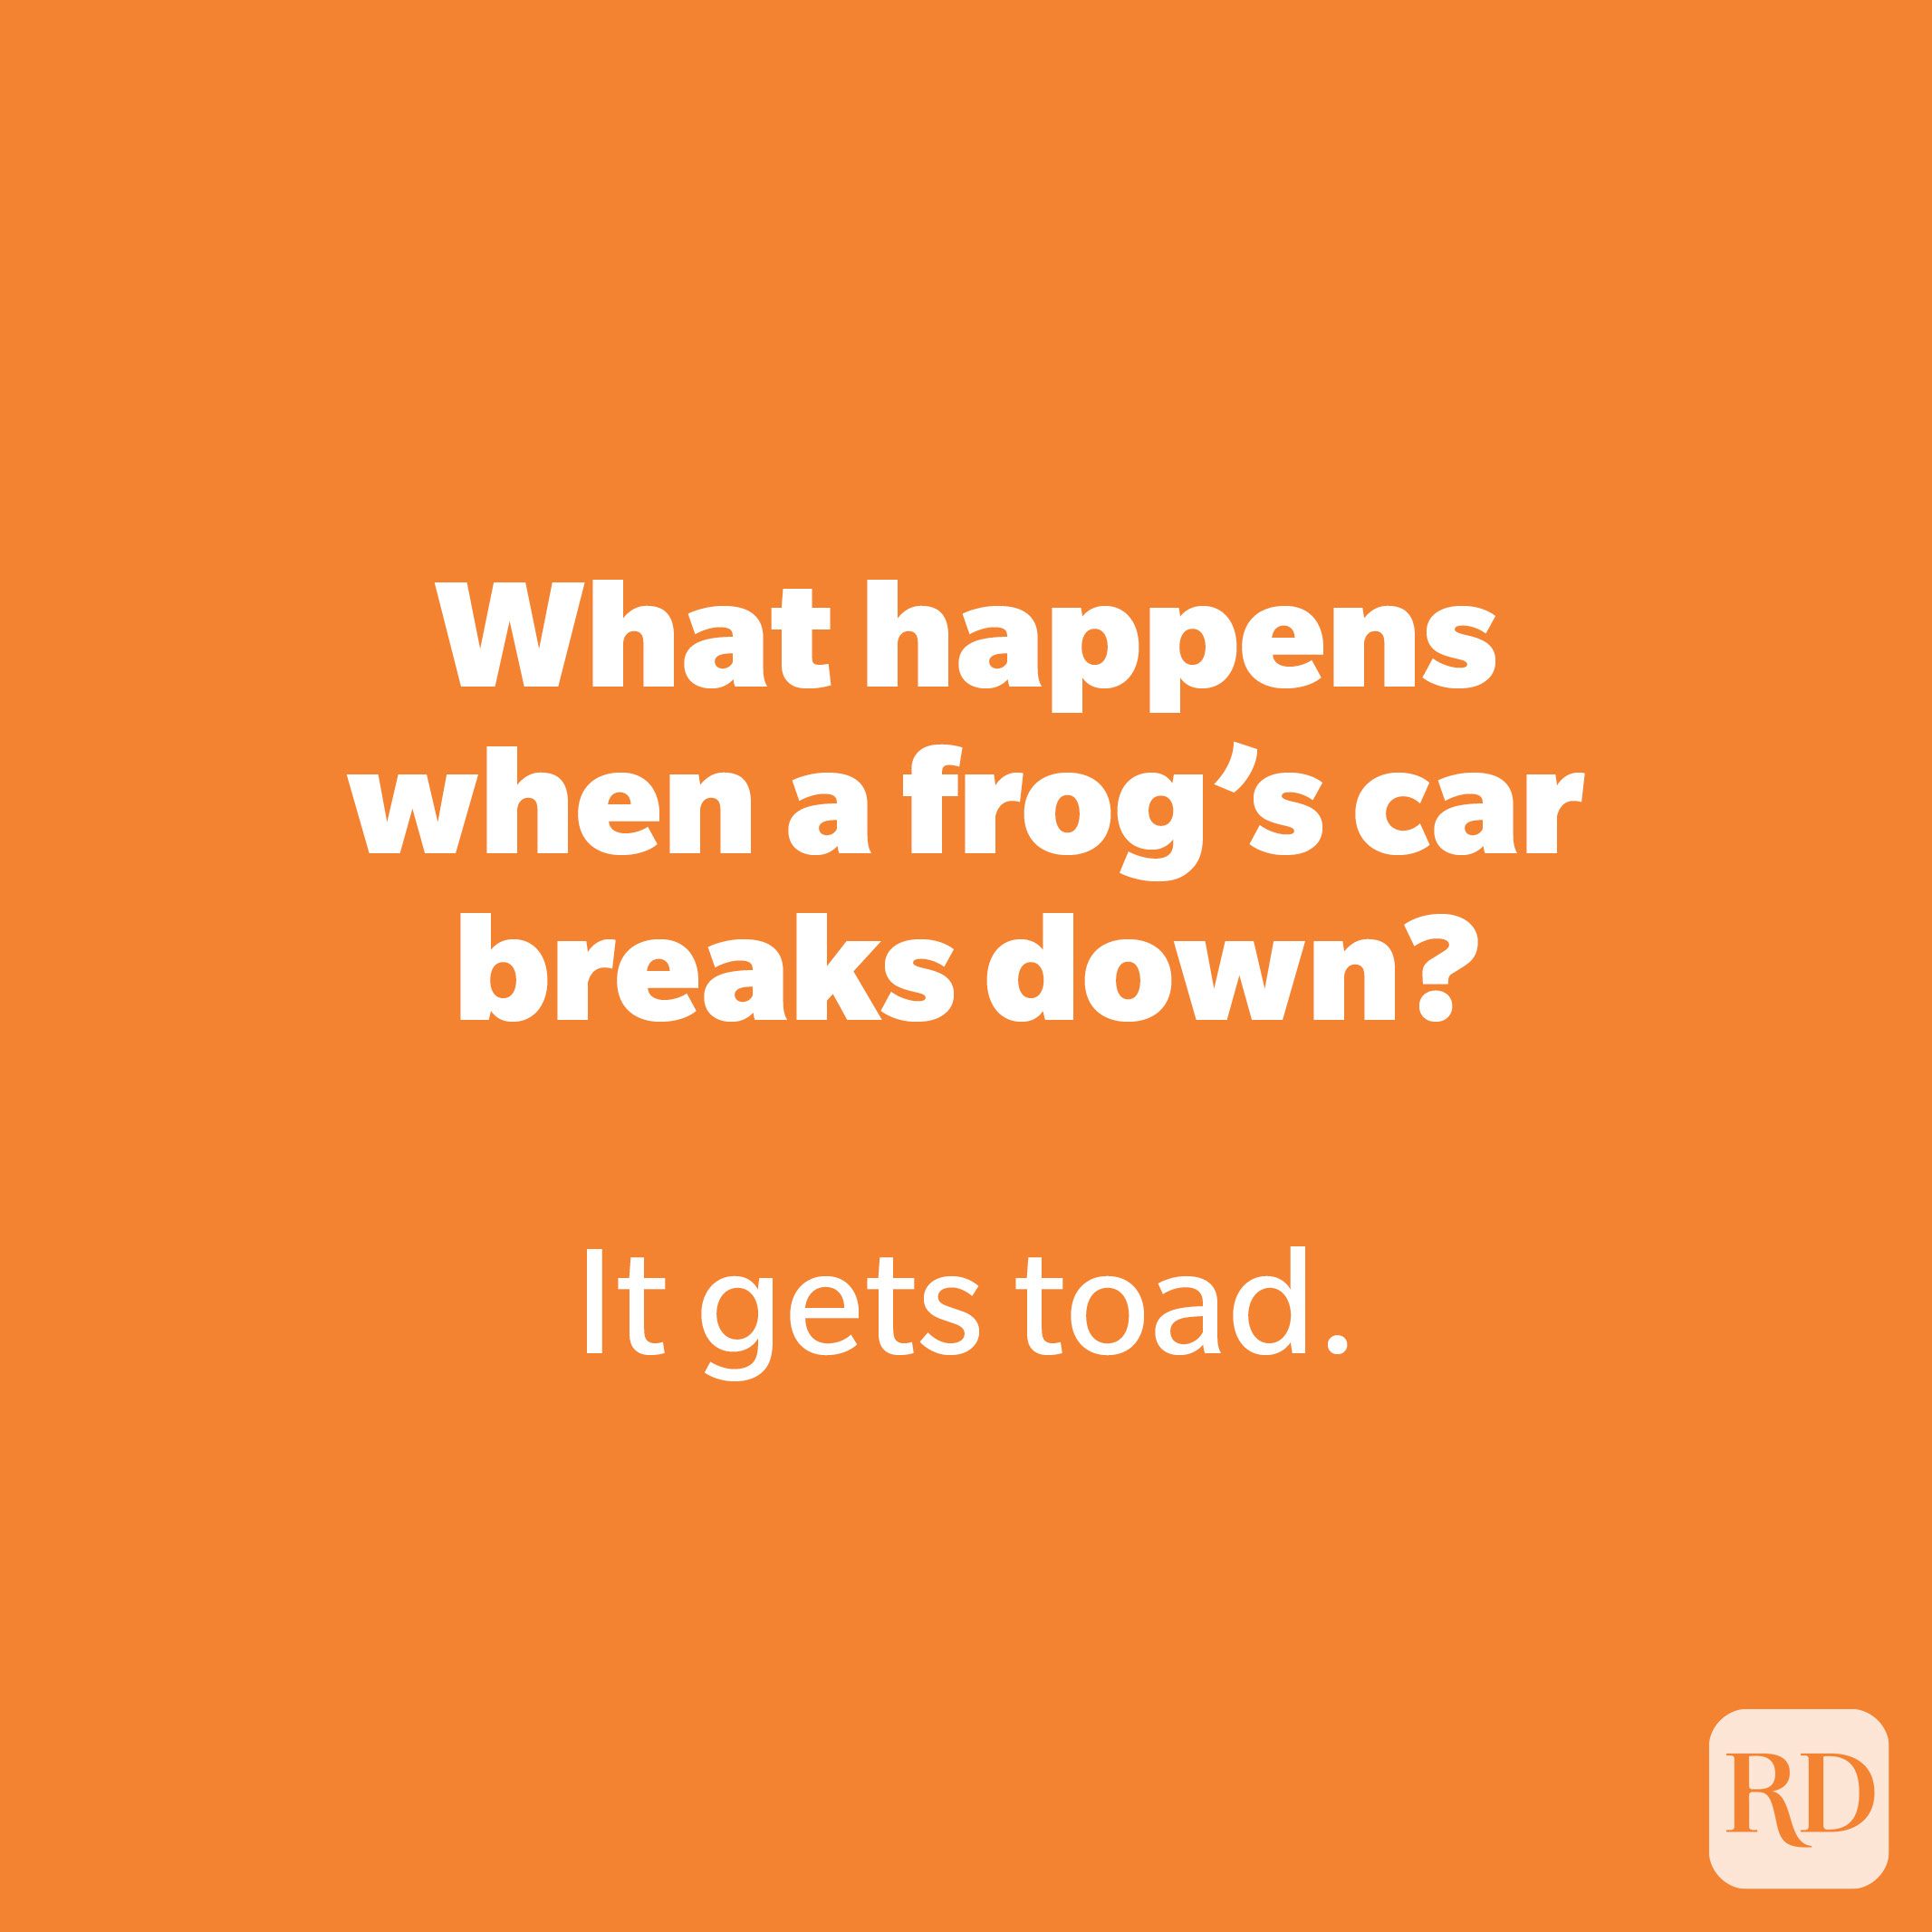 What happens when a frog's car breaks down?